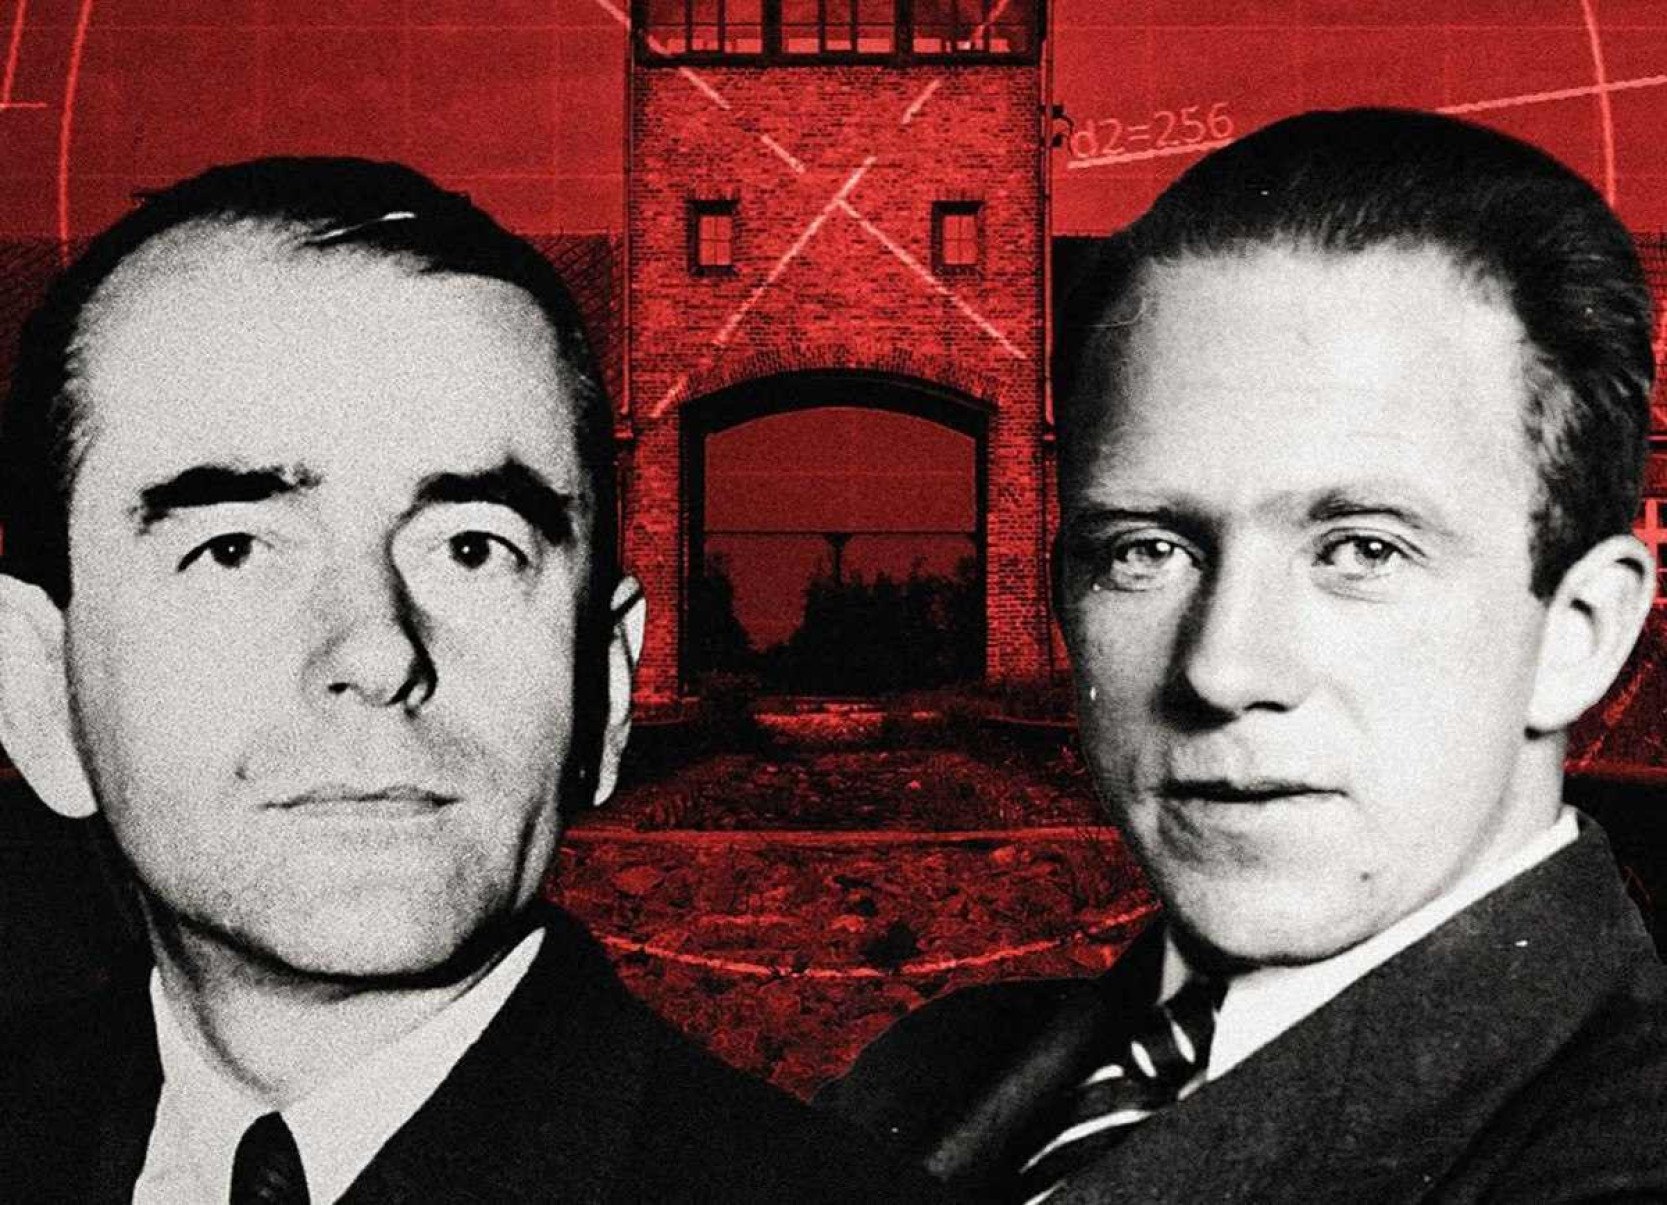 Série Engenheiros de Hitler investiga vida de arquitetos do nazismo